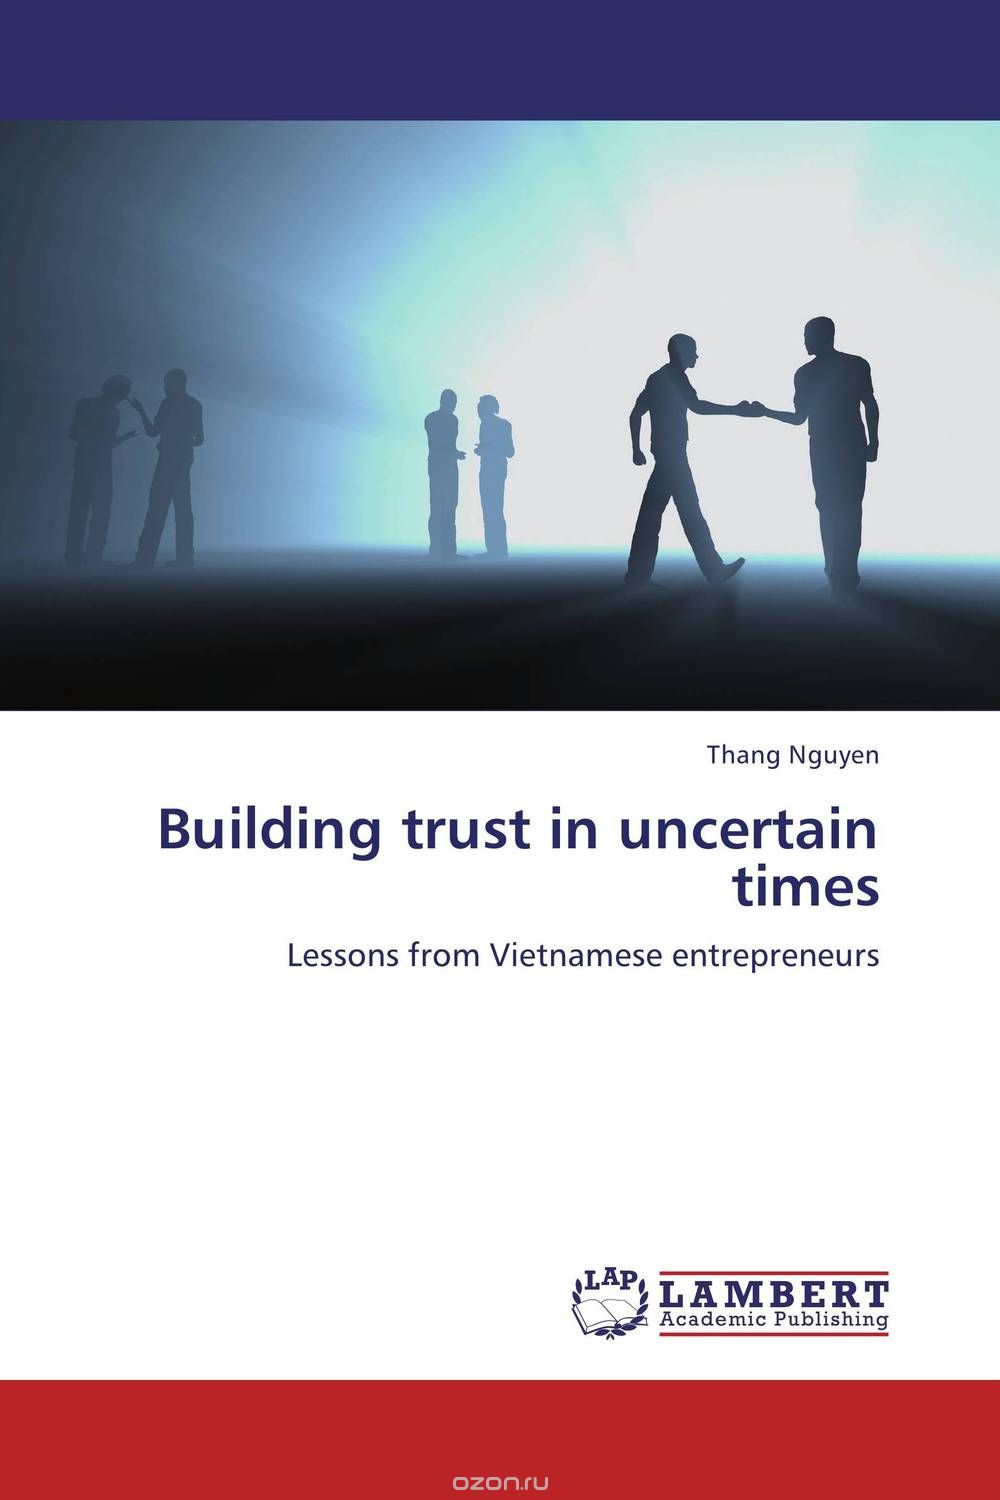 Скачать книгу "Building trust in uncertain times"